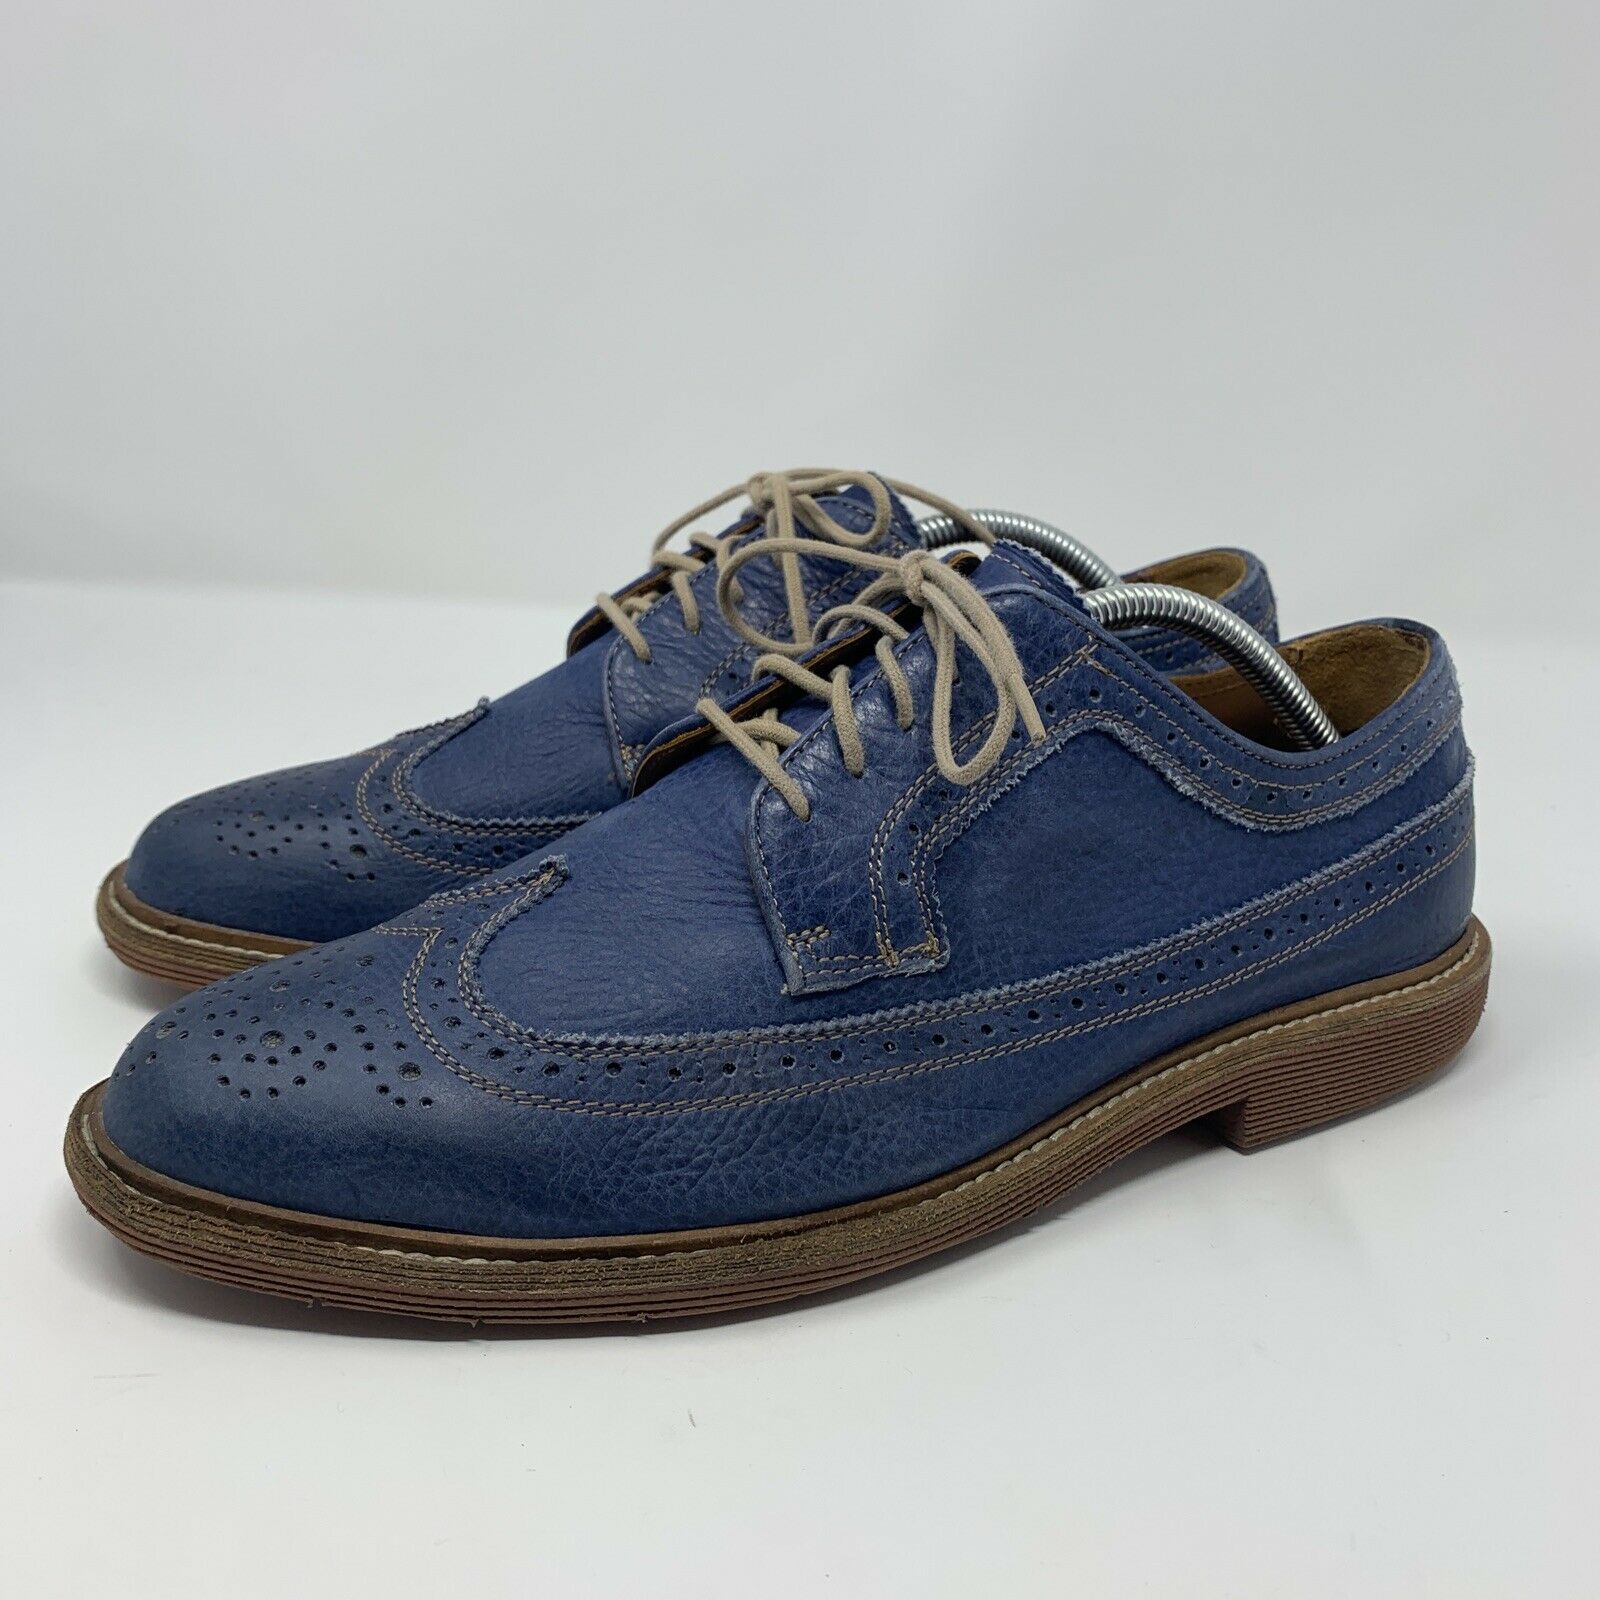 Florsheim Limited Blue Mens Dress Shoes Size 10.5D Leather Wingtip Oxford Royal